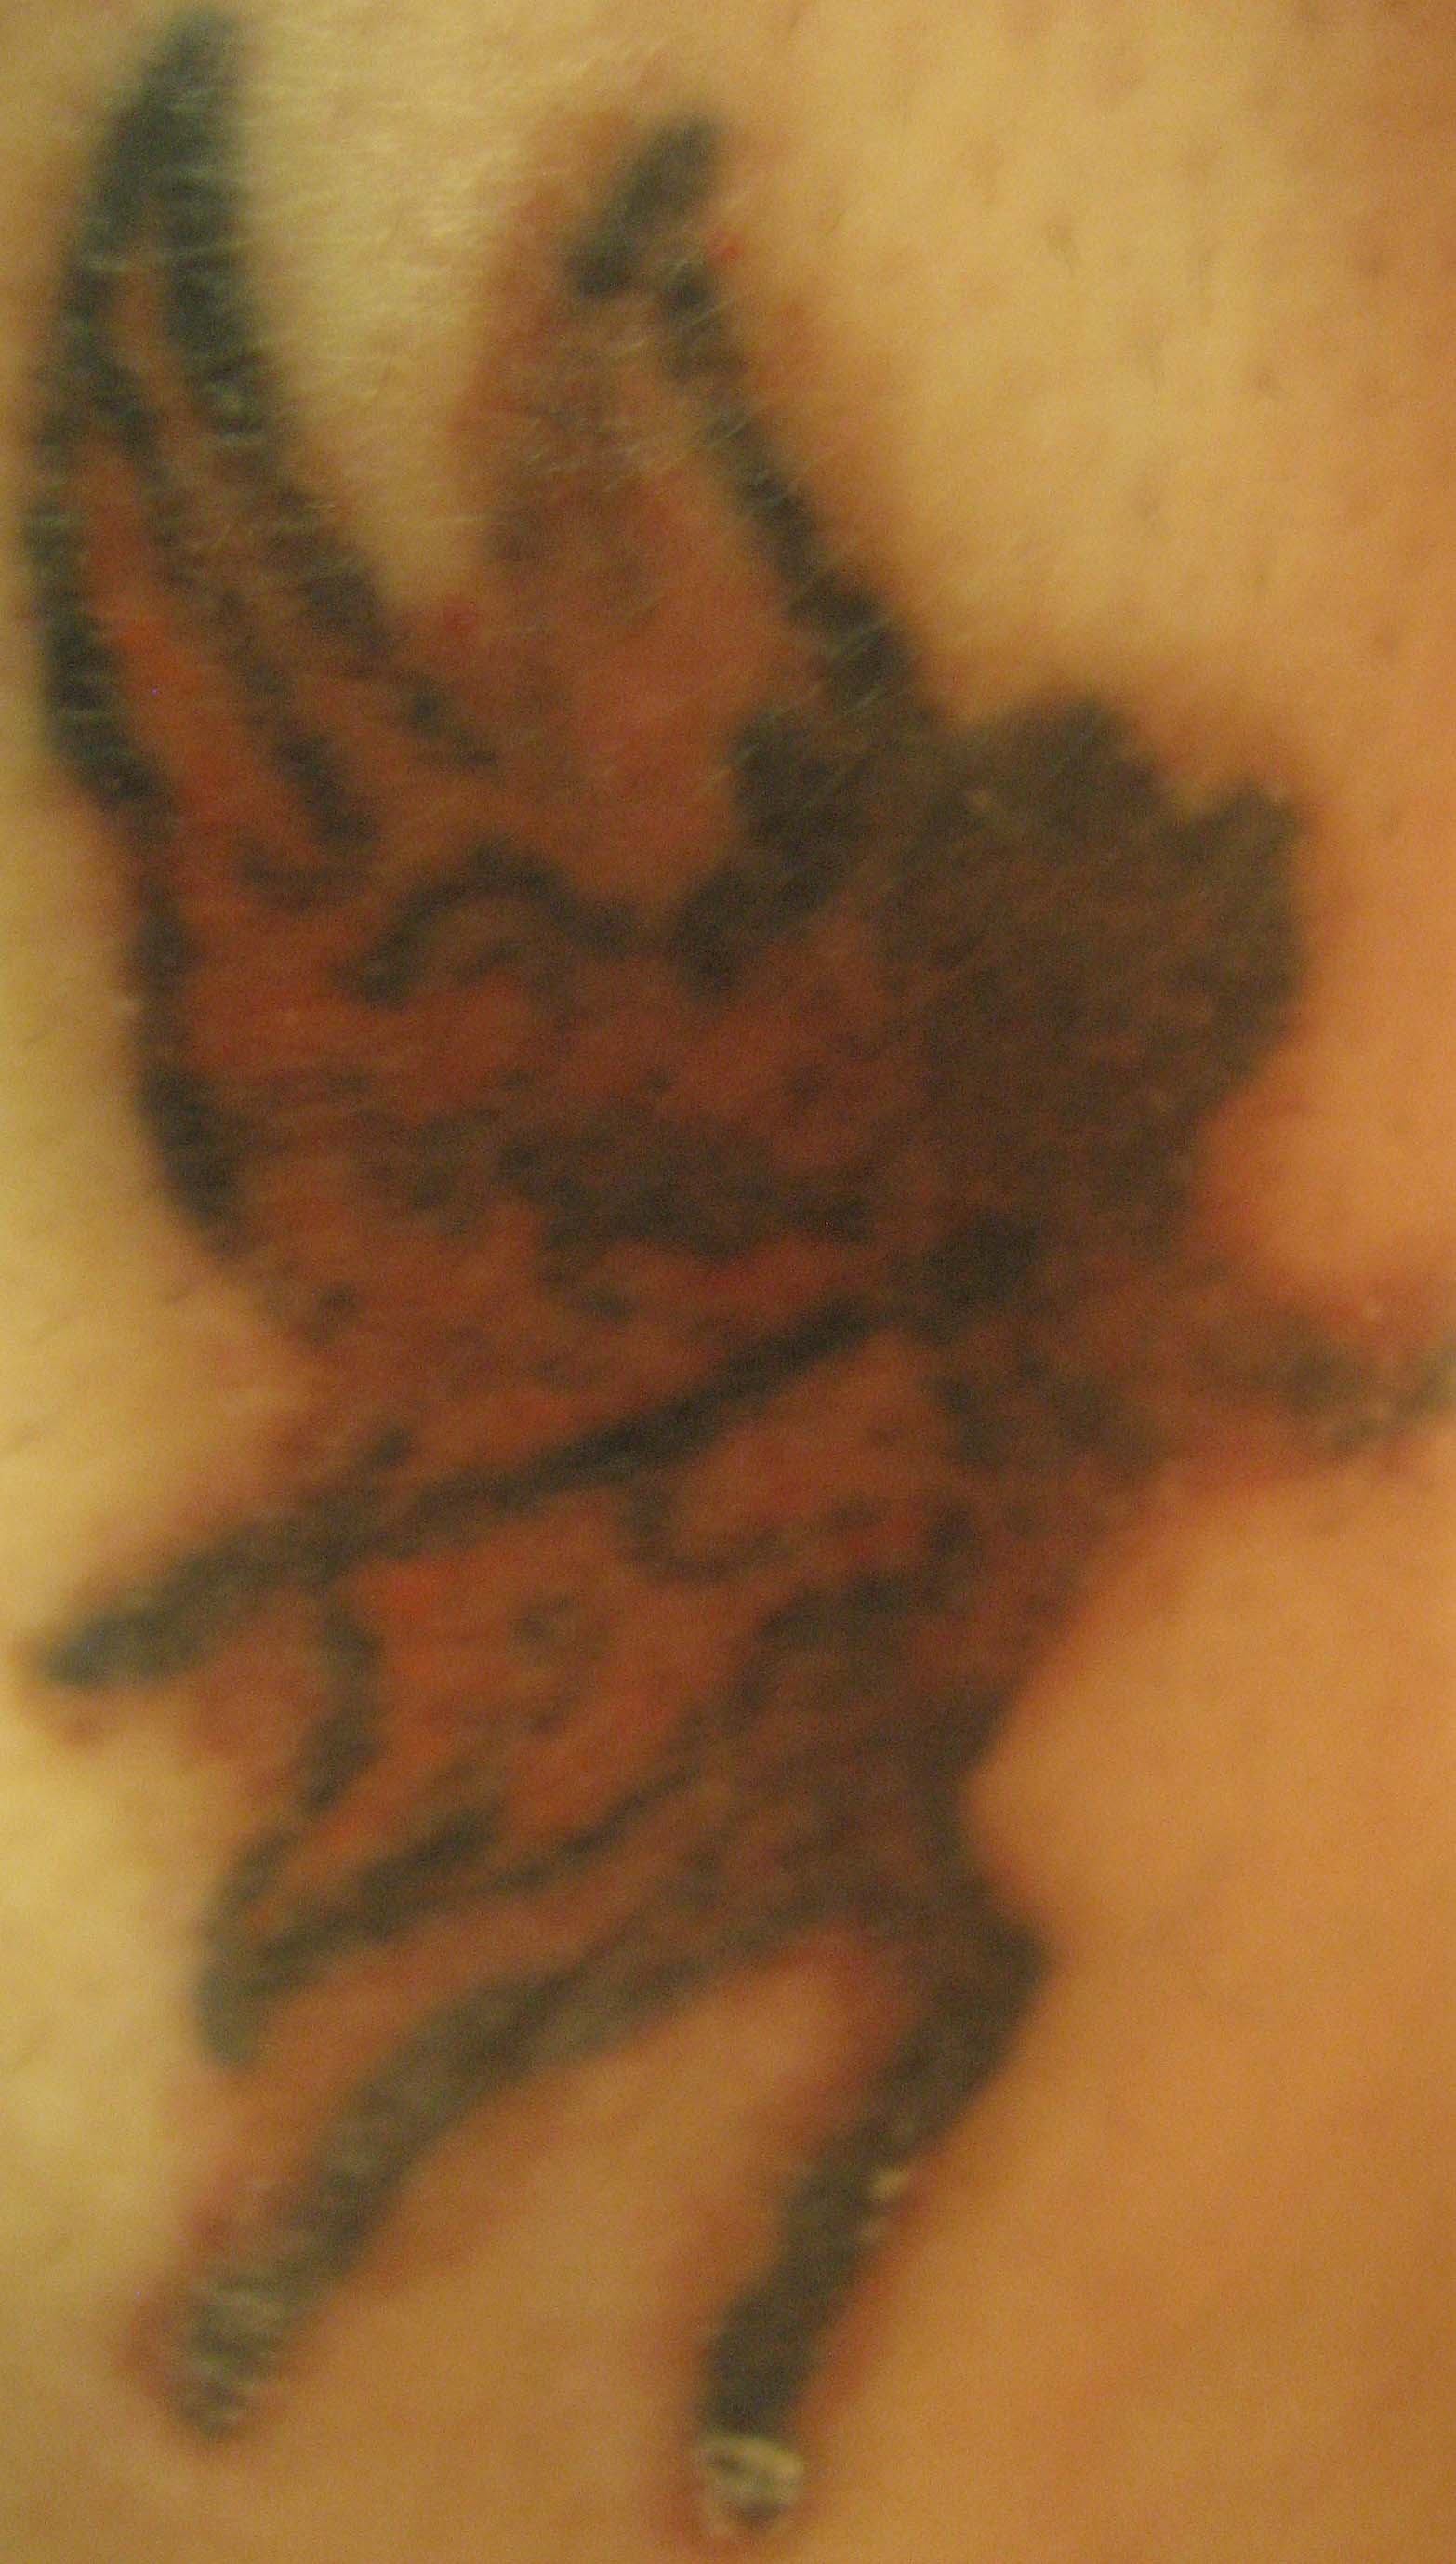 inside arm tattoos. inside arm arm quote tattoos